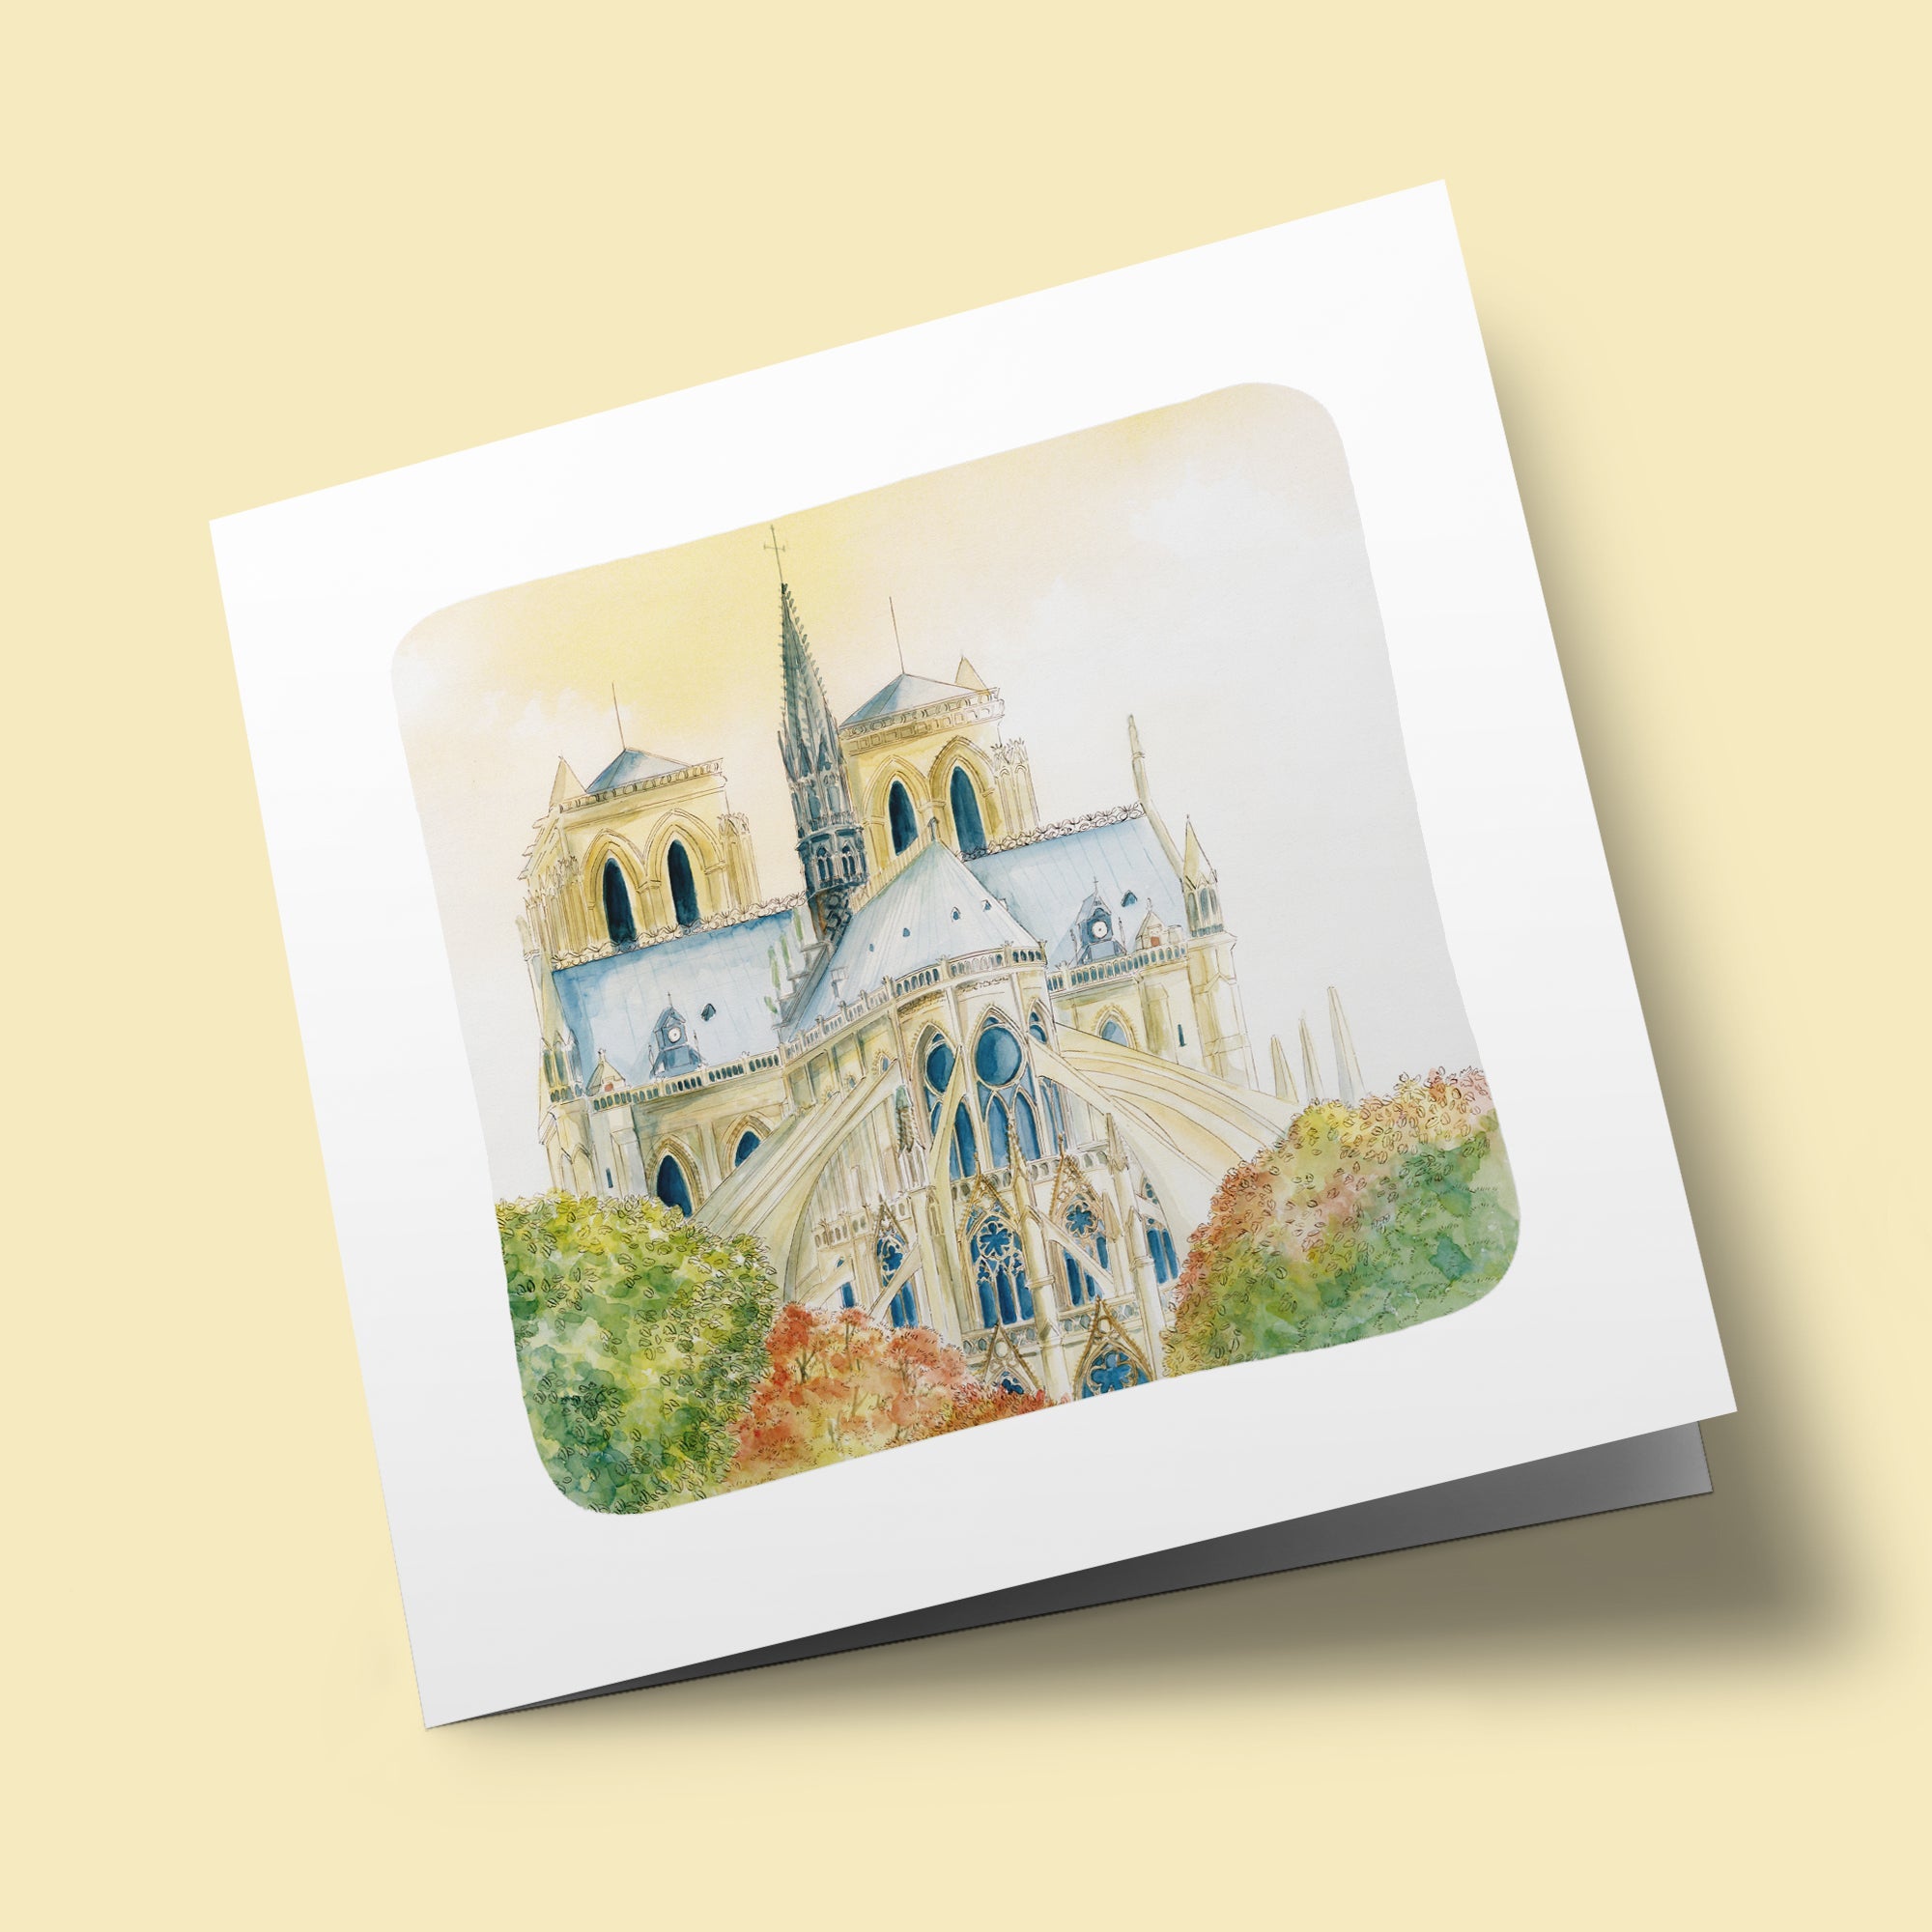 Memories of Paris - Notre-Dame